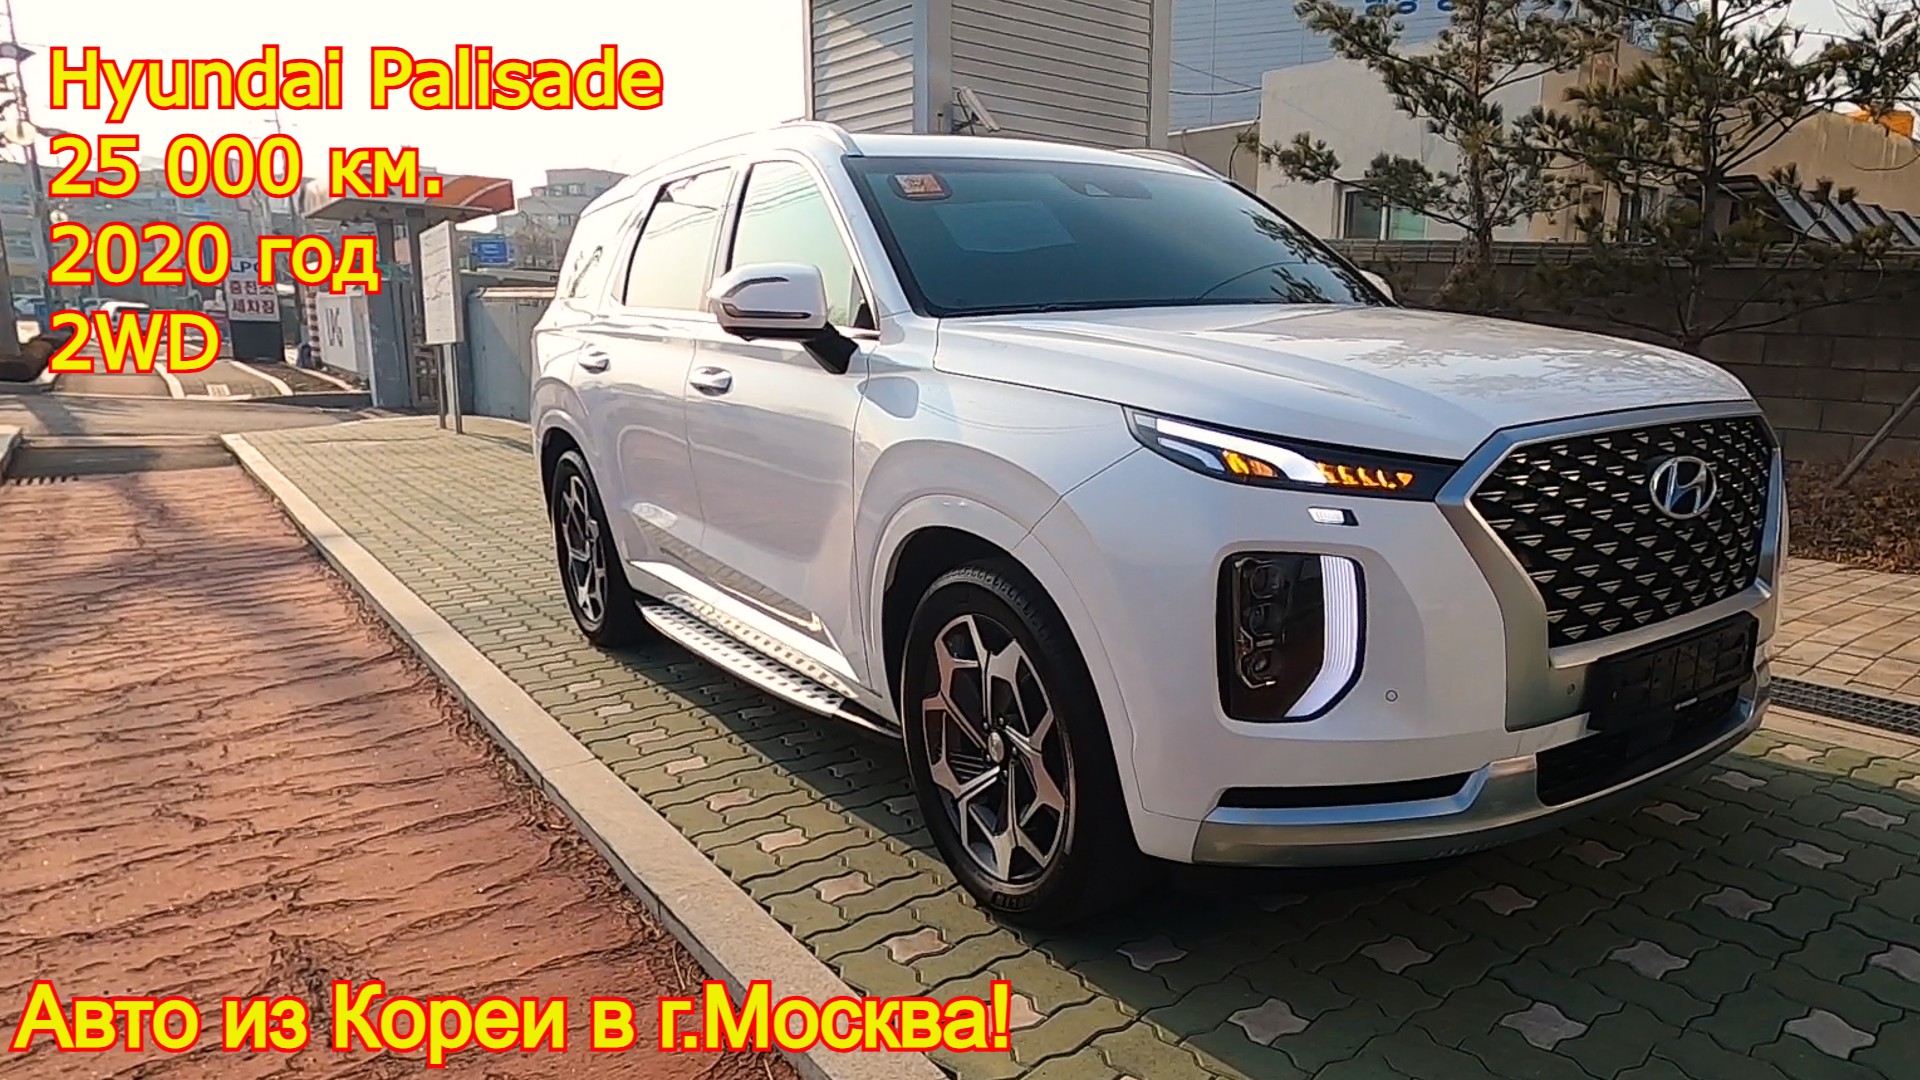 Авто из Кореи в г.Москва - Hyundai Palisade, 2020/21 год, 25 000 км., 2WD, Calligraphy!